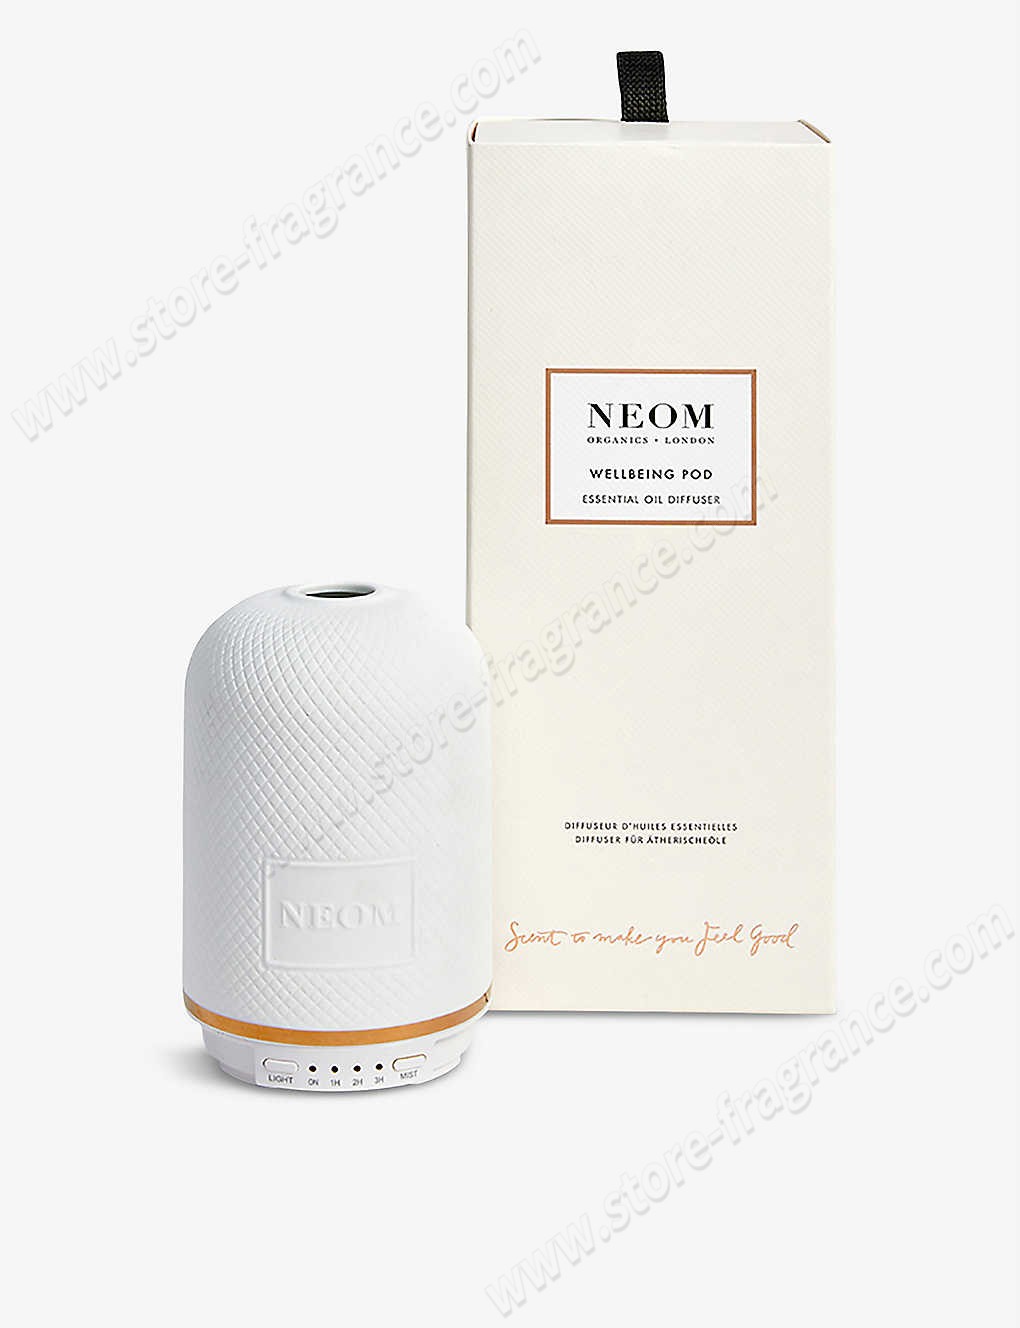 NEOM/Wellbeing Pod essential oil diffuser 13cm ✿ Discount Store - NEOM/Wellbeing Pod essential oil diffuser 13cm ✿ Discount Store